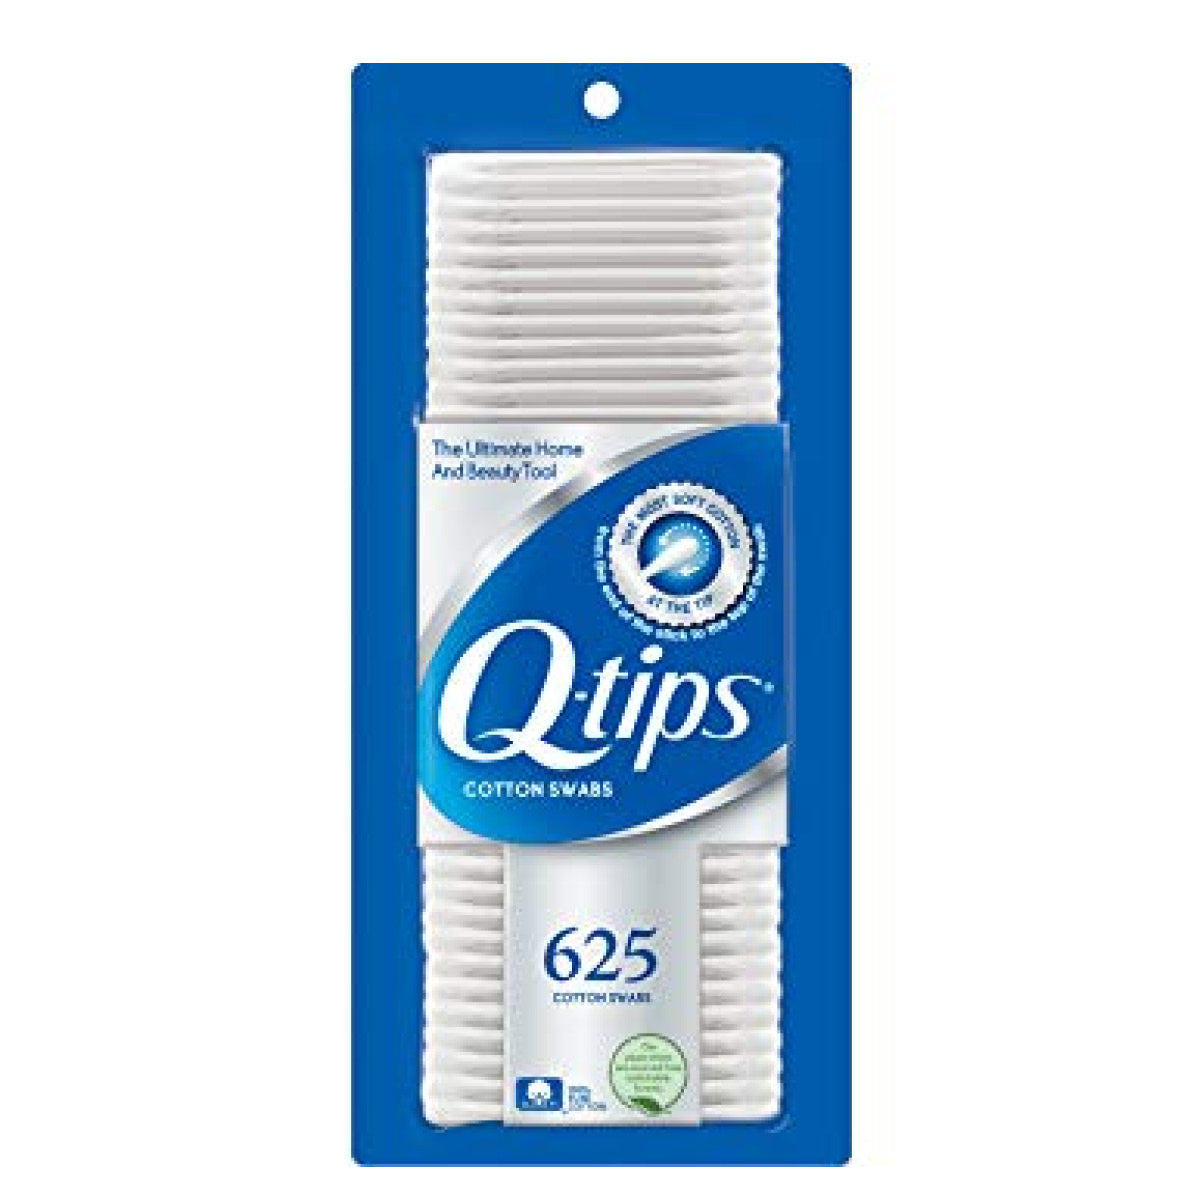 Q-tips Cotton Swabs, 500ct